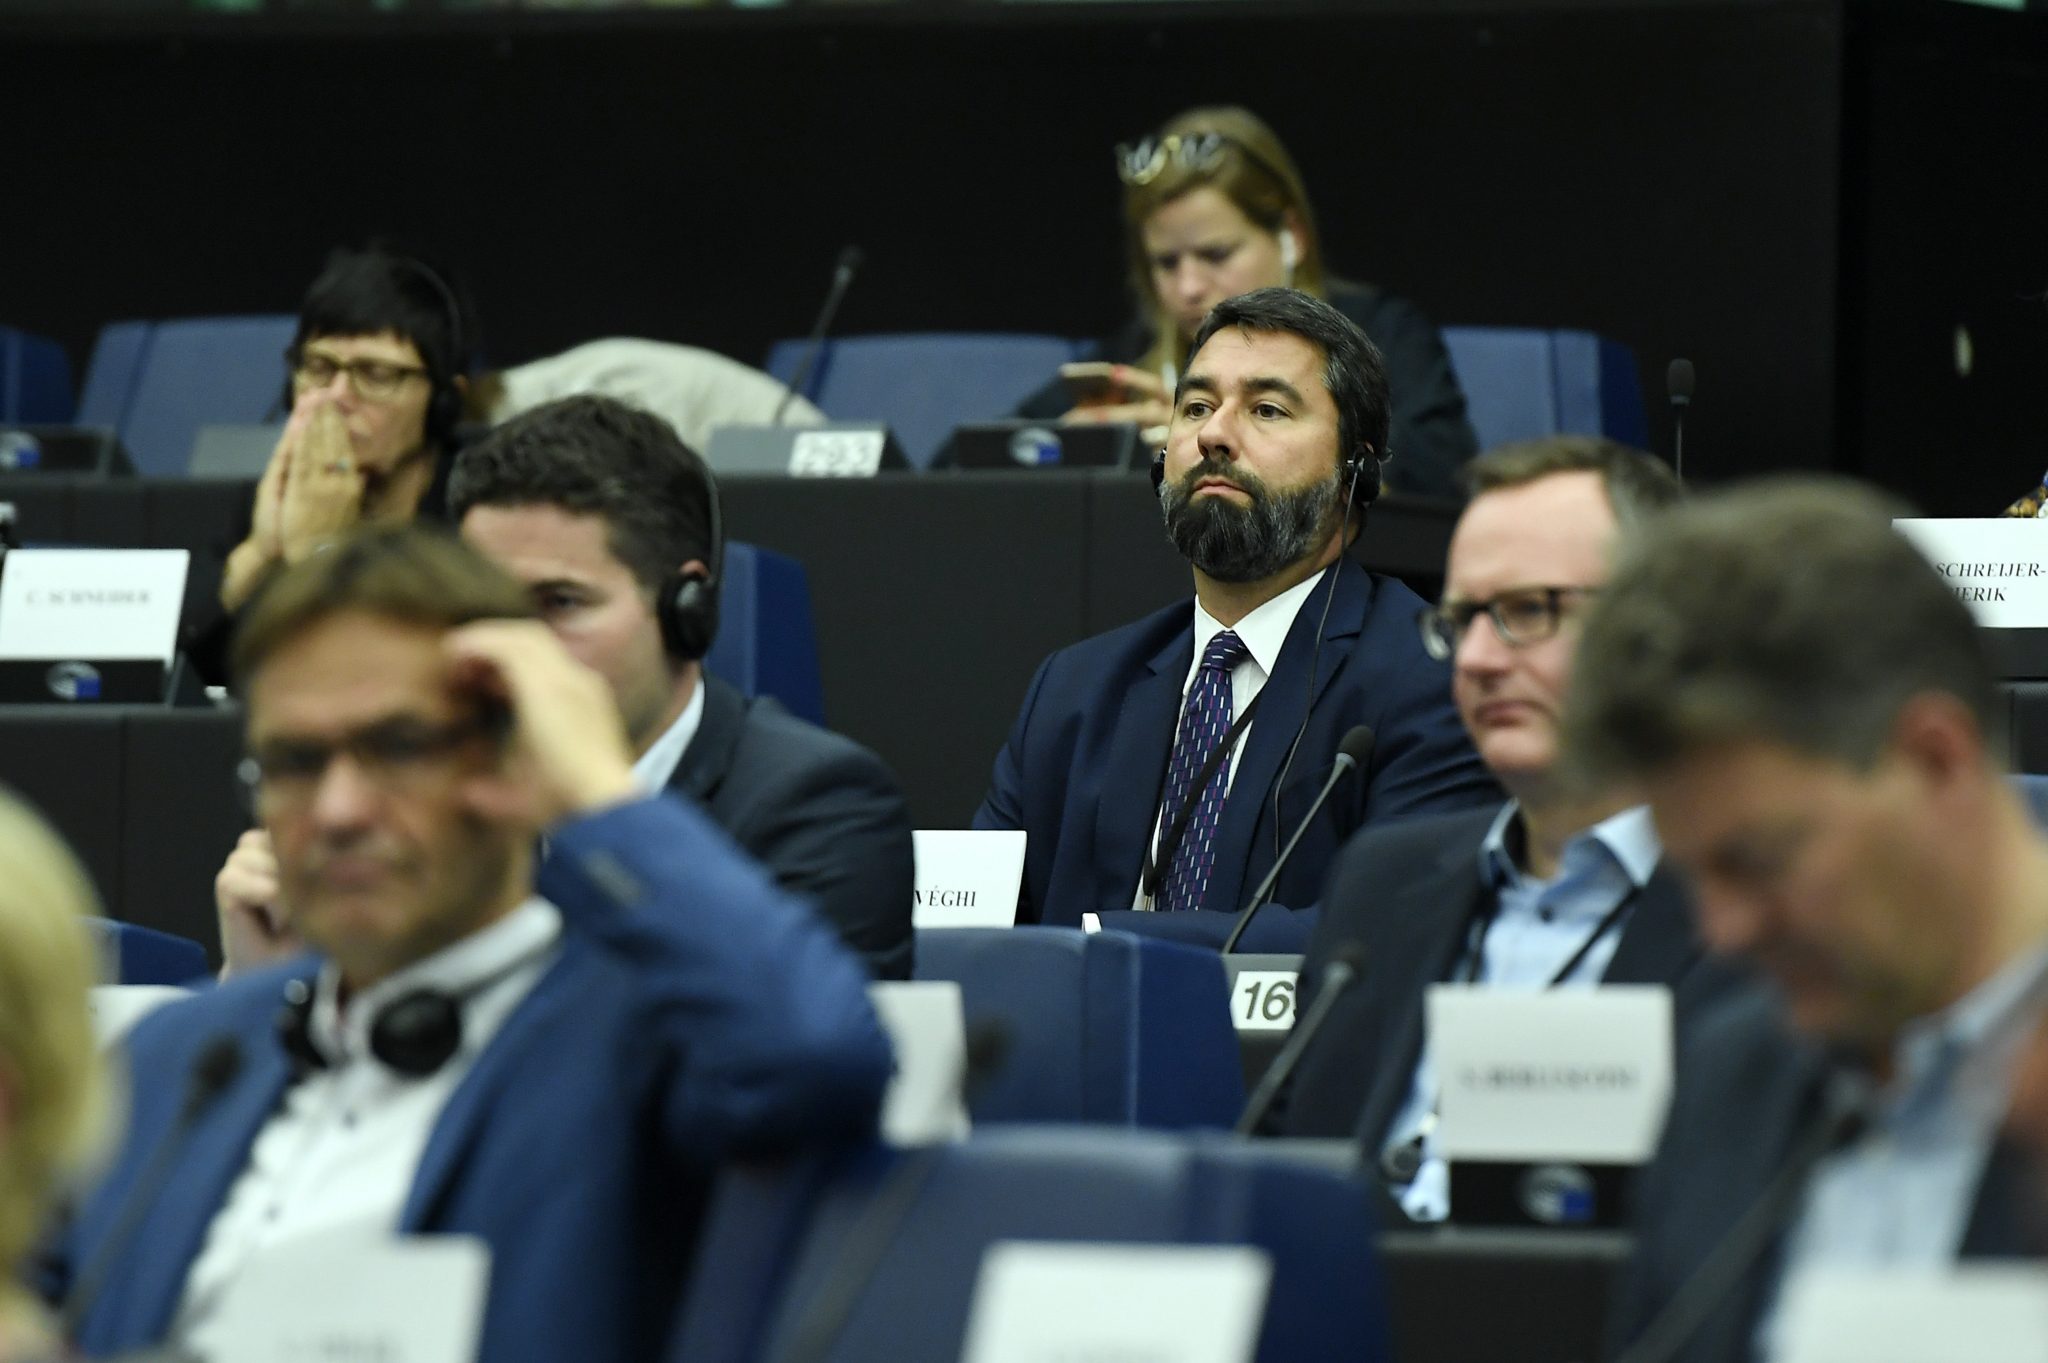 Fidesz MEP: Brussels Abusing its Powers